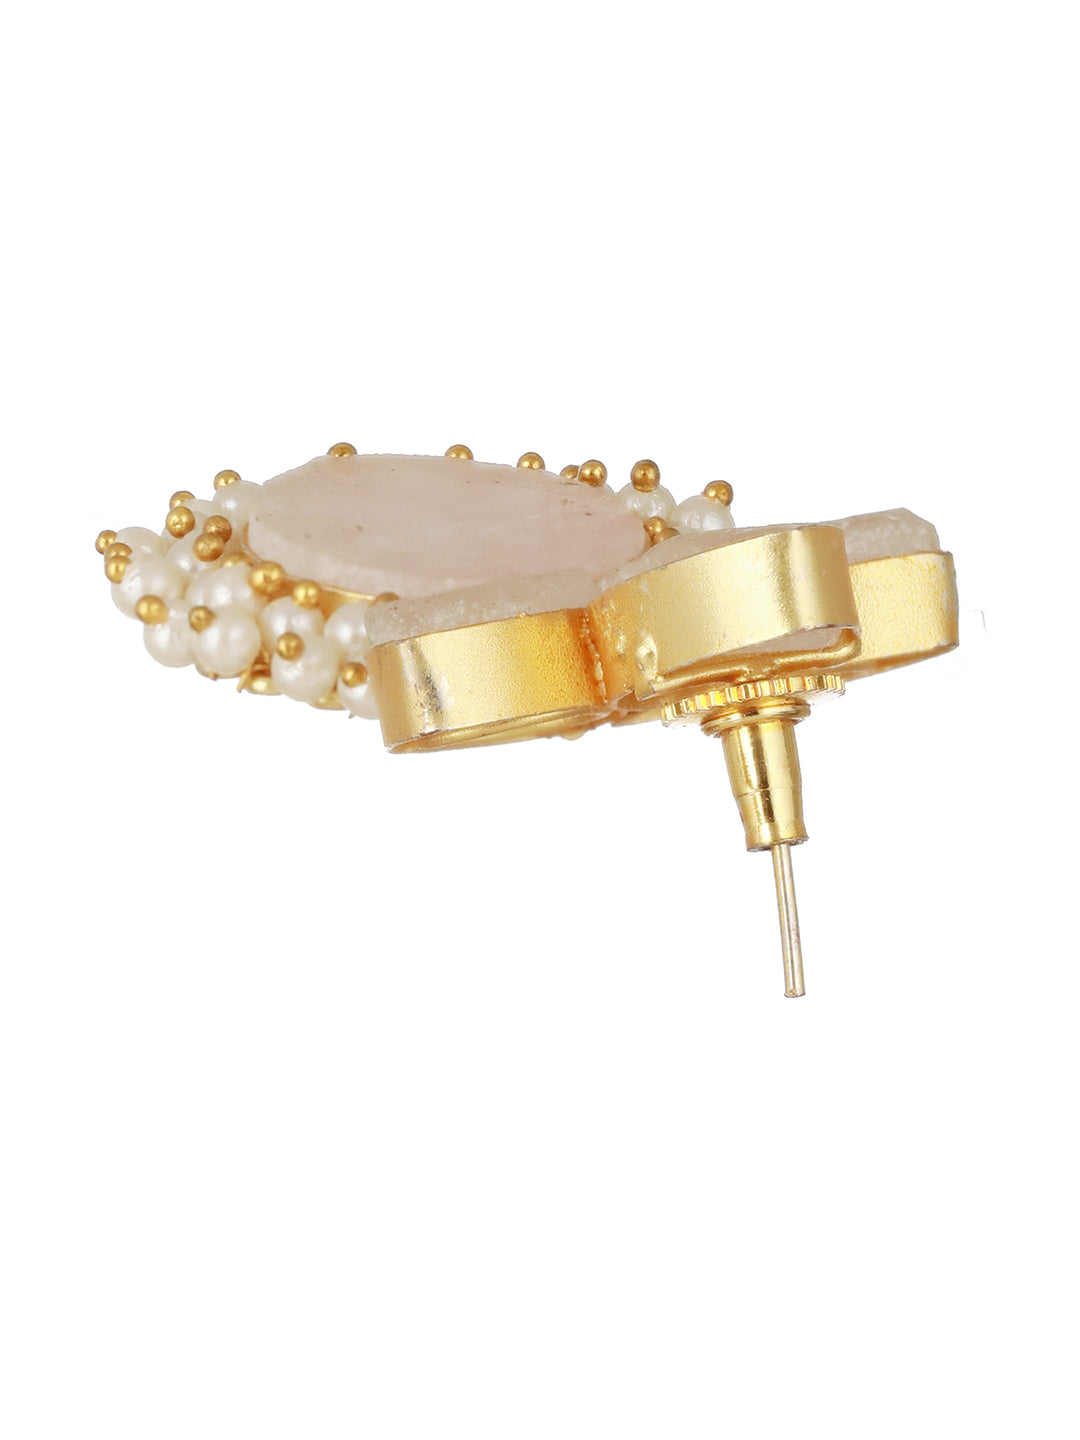 Priyaasi Pink Stone White Bead Floral Gold-Plated Drop Earrings